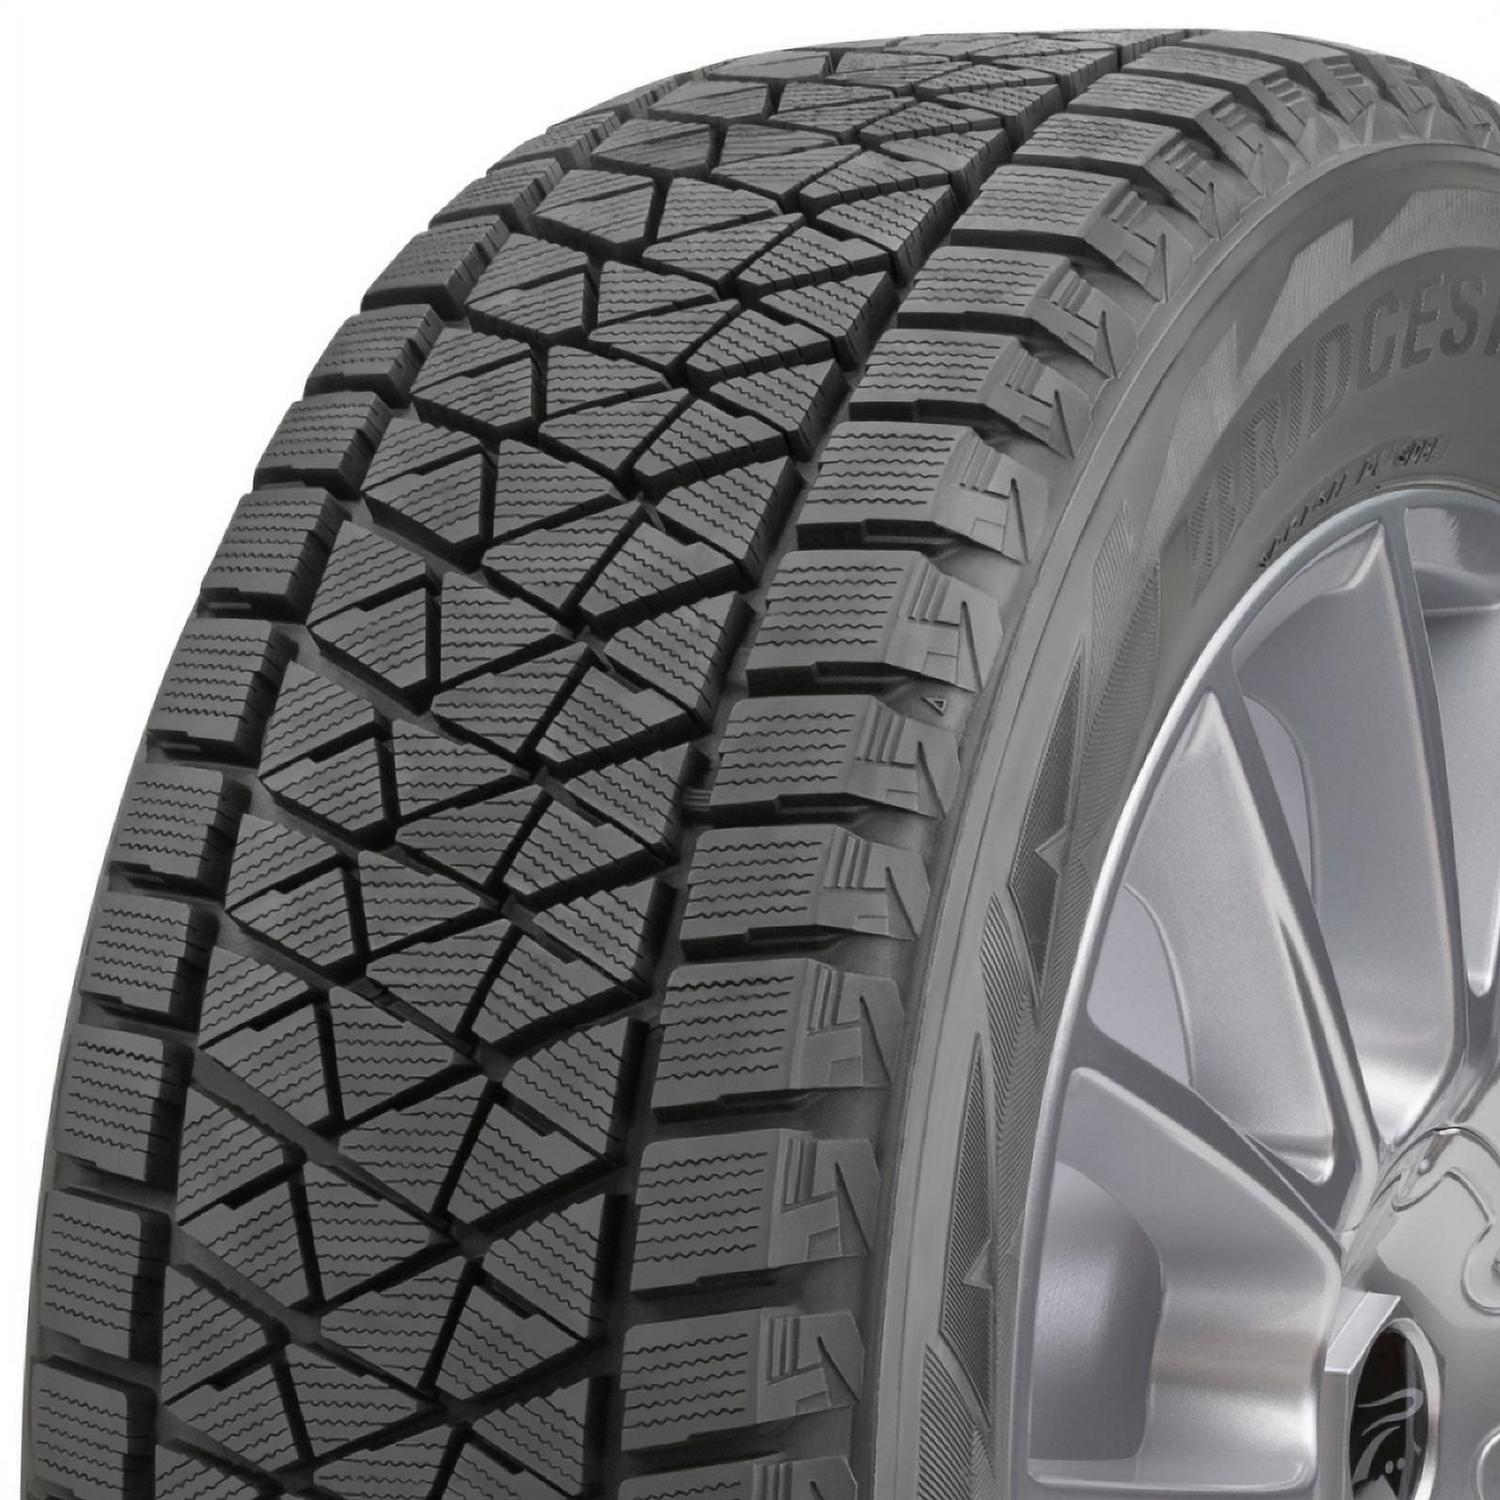 Bridgestone blizzak dm-v2 P235/60R18 107S bsw winter tire